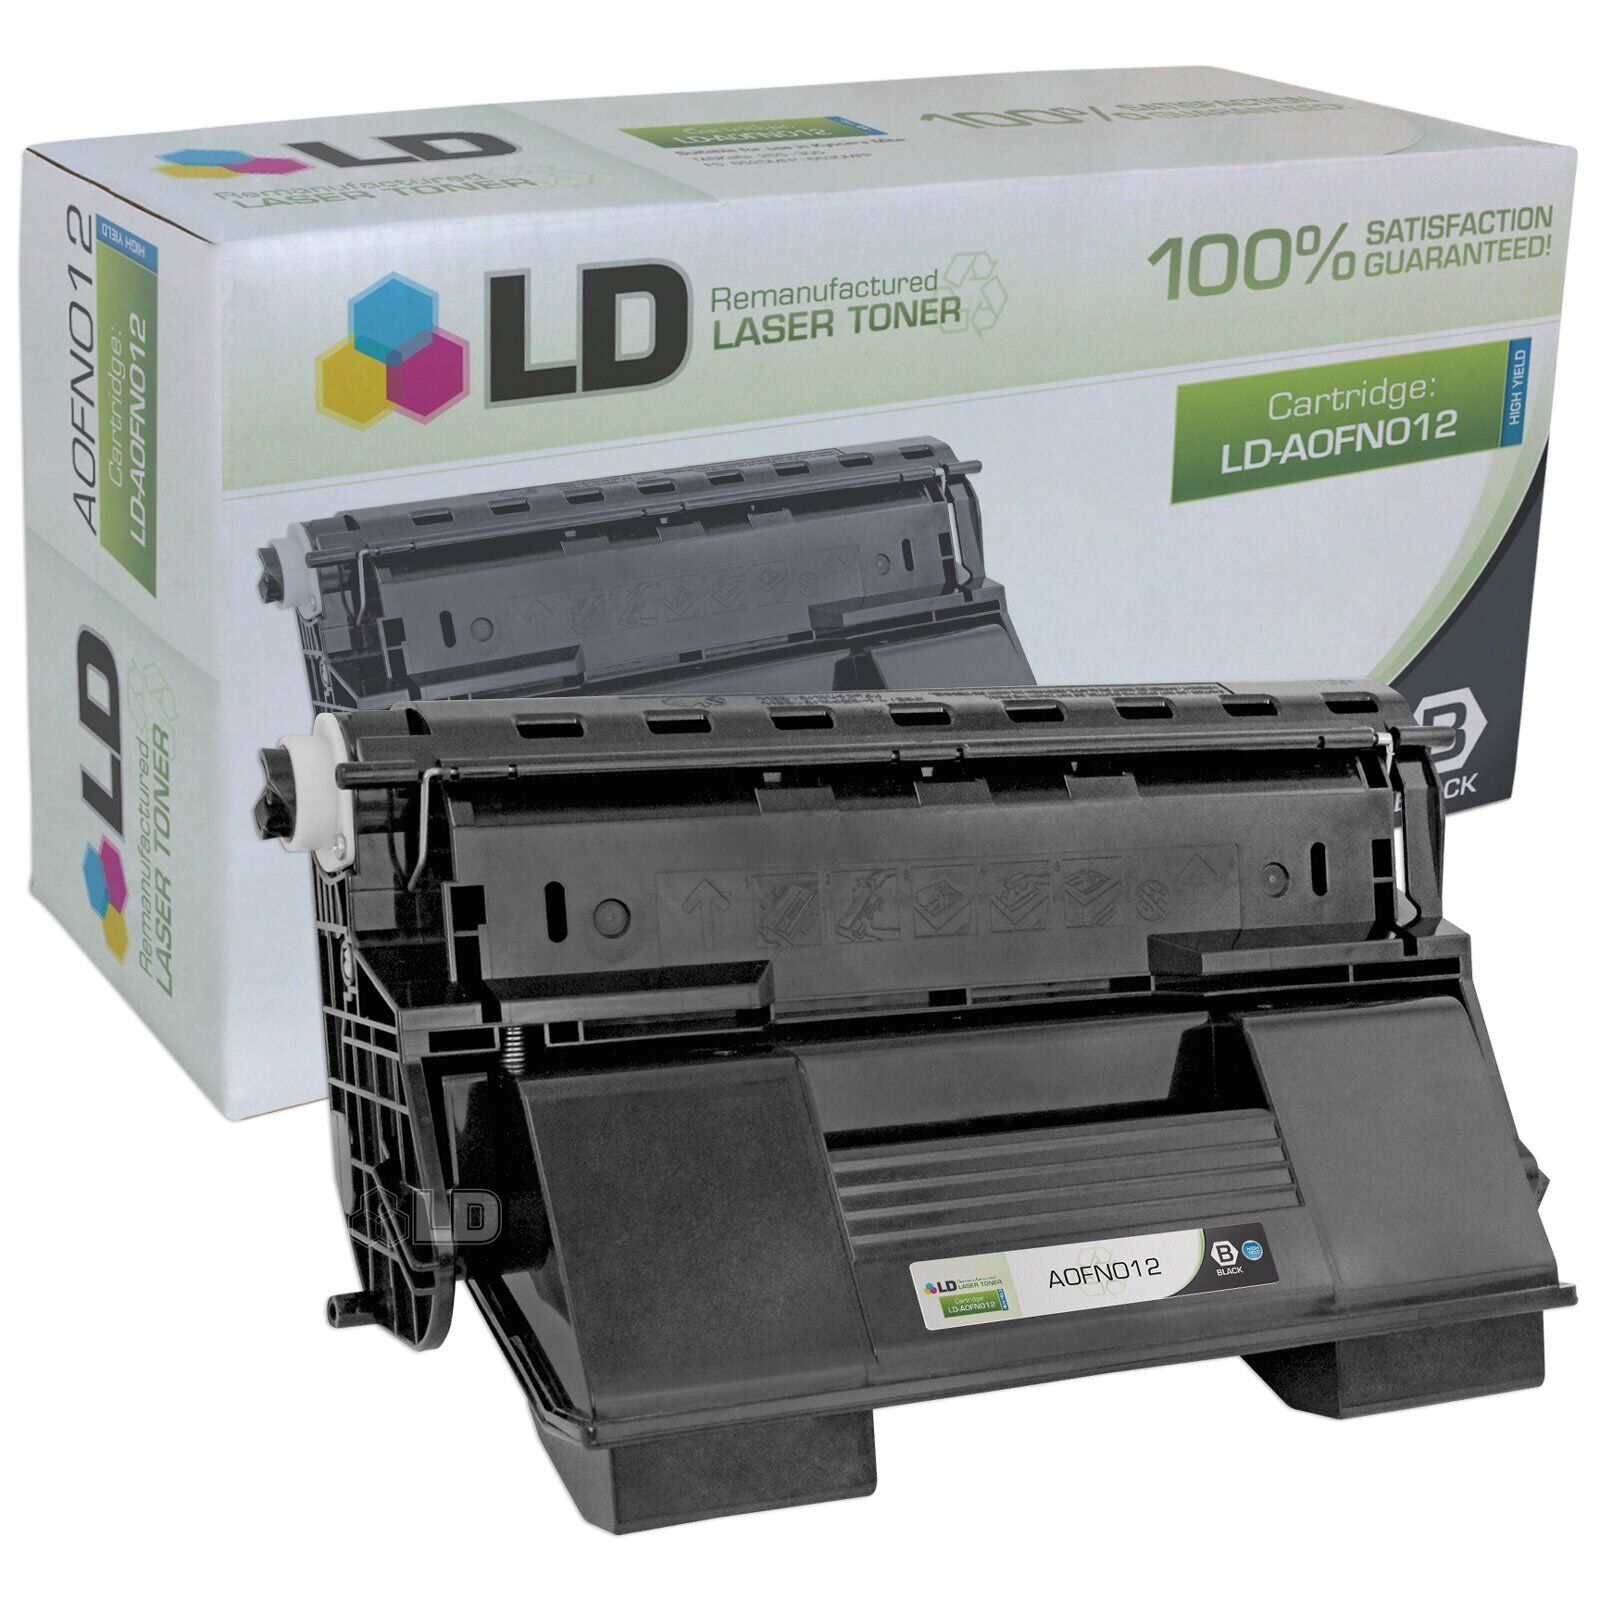 LD A0FN012 Black Laser Toner Cartridge for Konica-Minolta PagePro 4650EN Printer